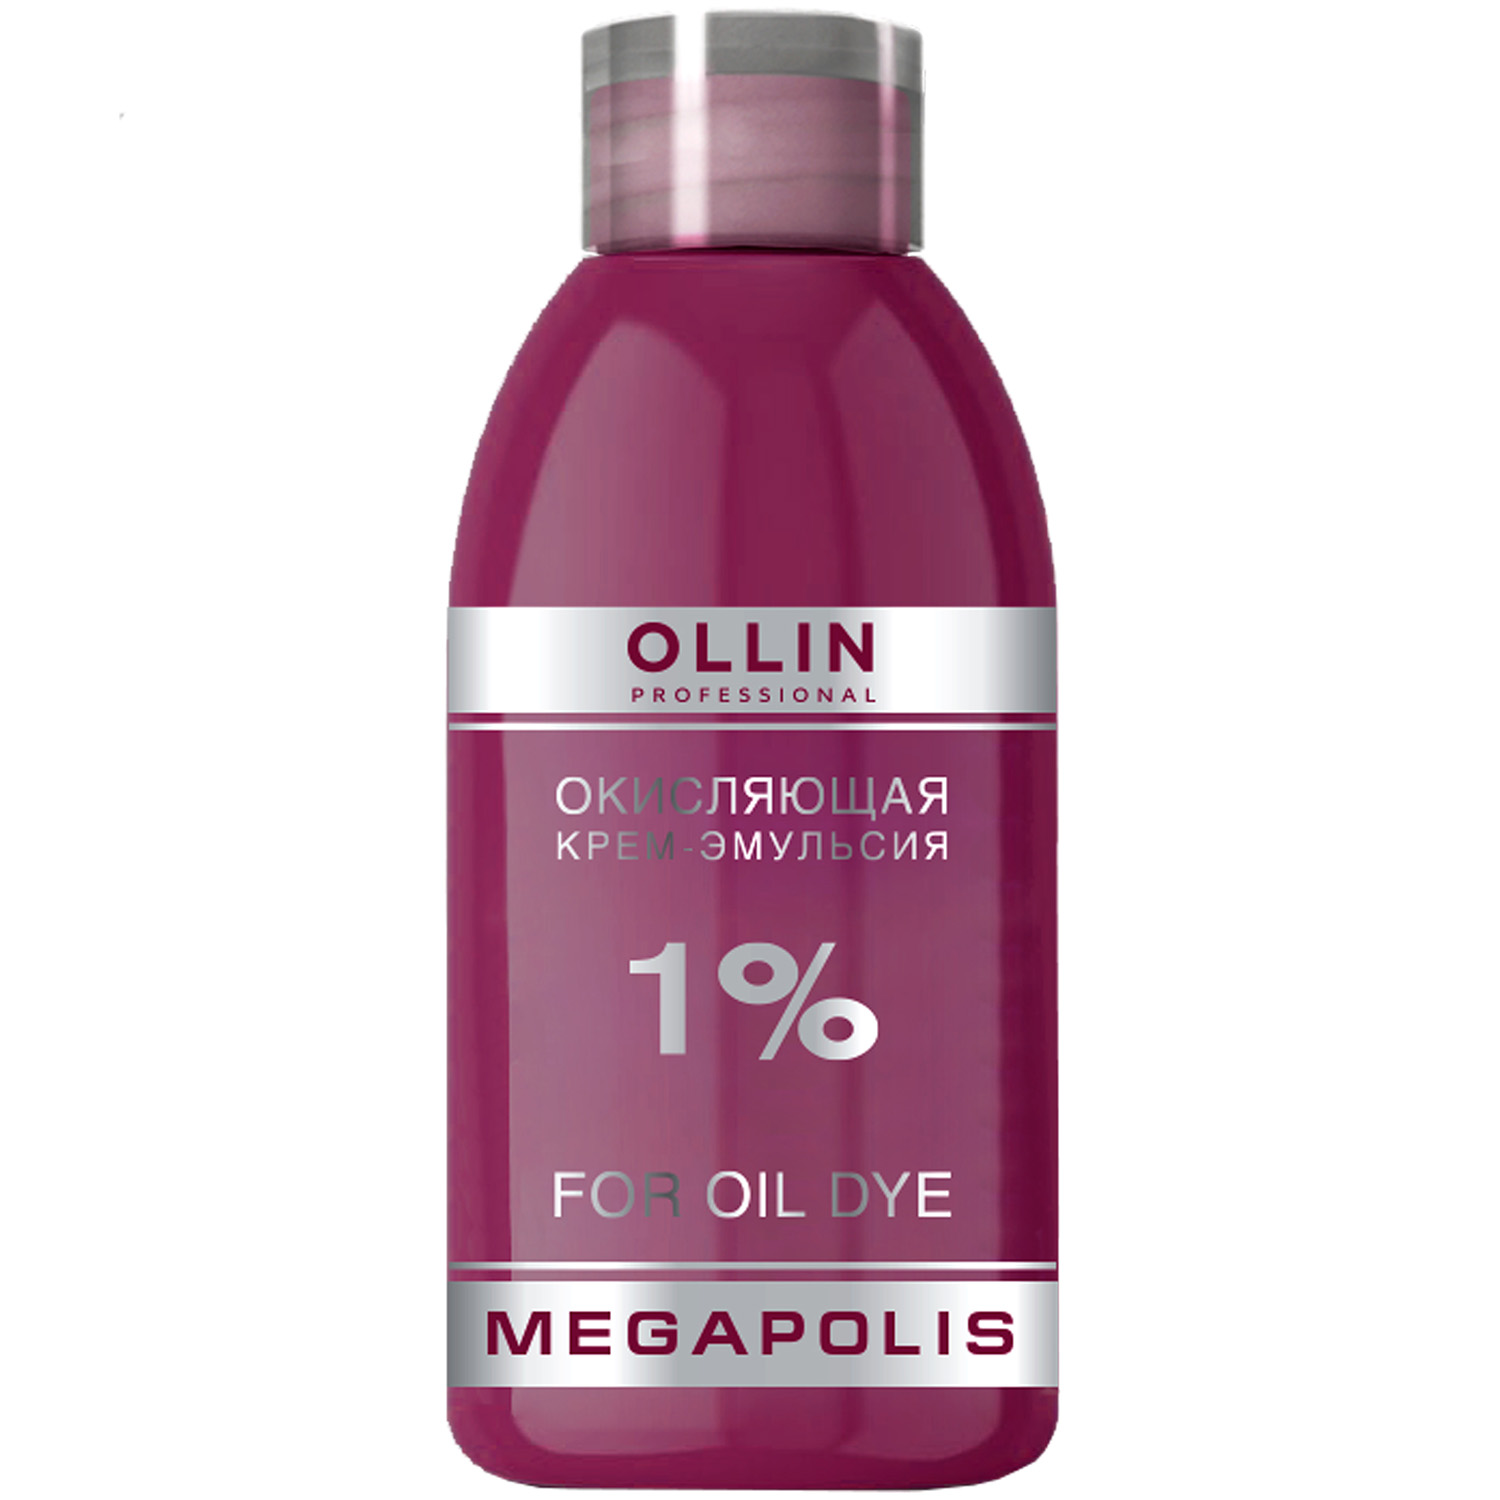 Ollin Professional Окисляющая крем-эмульсия 1%, 75 мл (Ollin Professional, Megapolis)